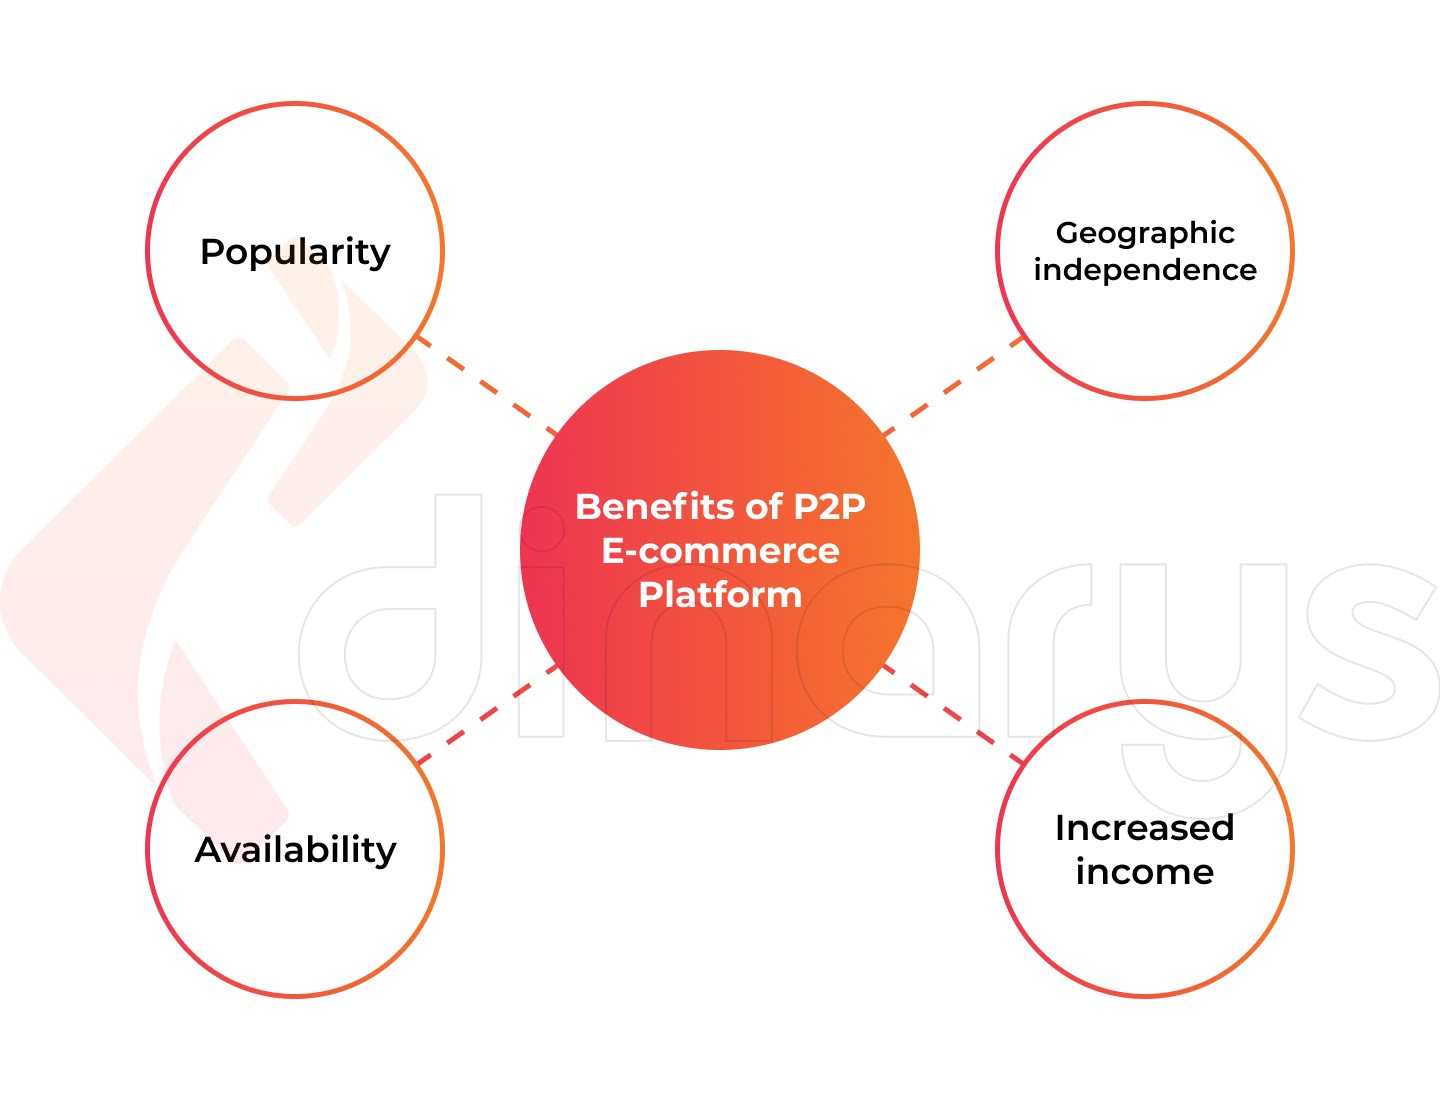 Benefits of a P2P E-commerce Platform